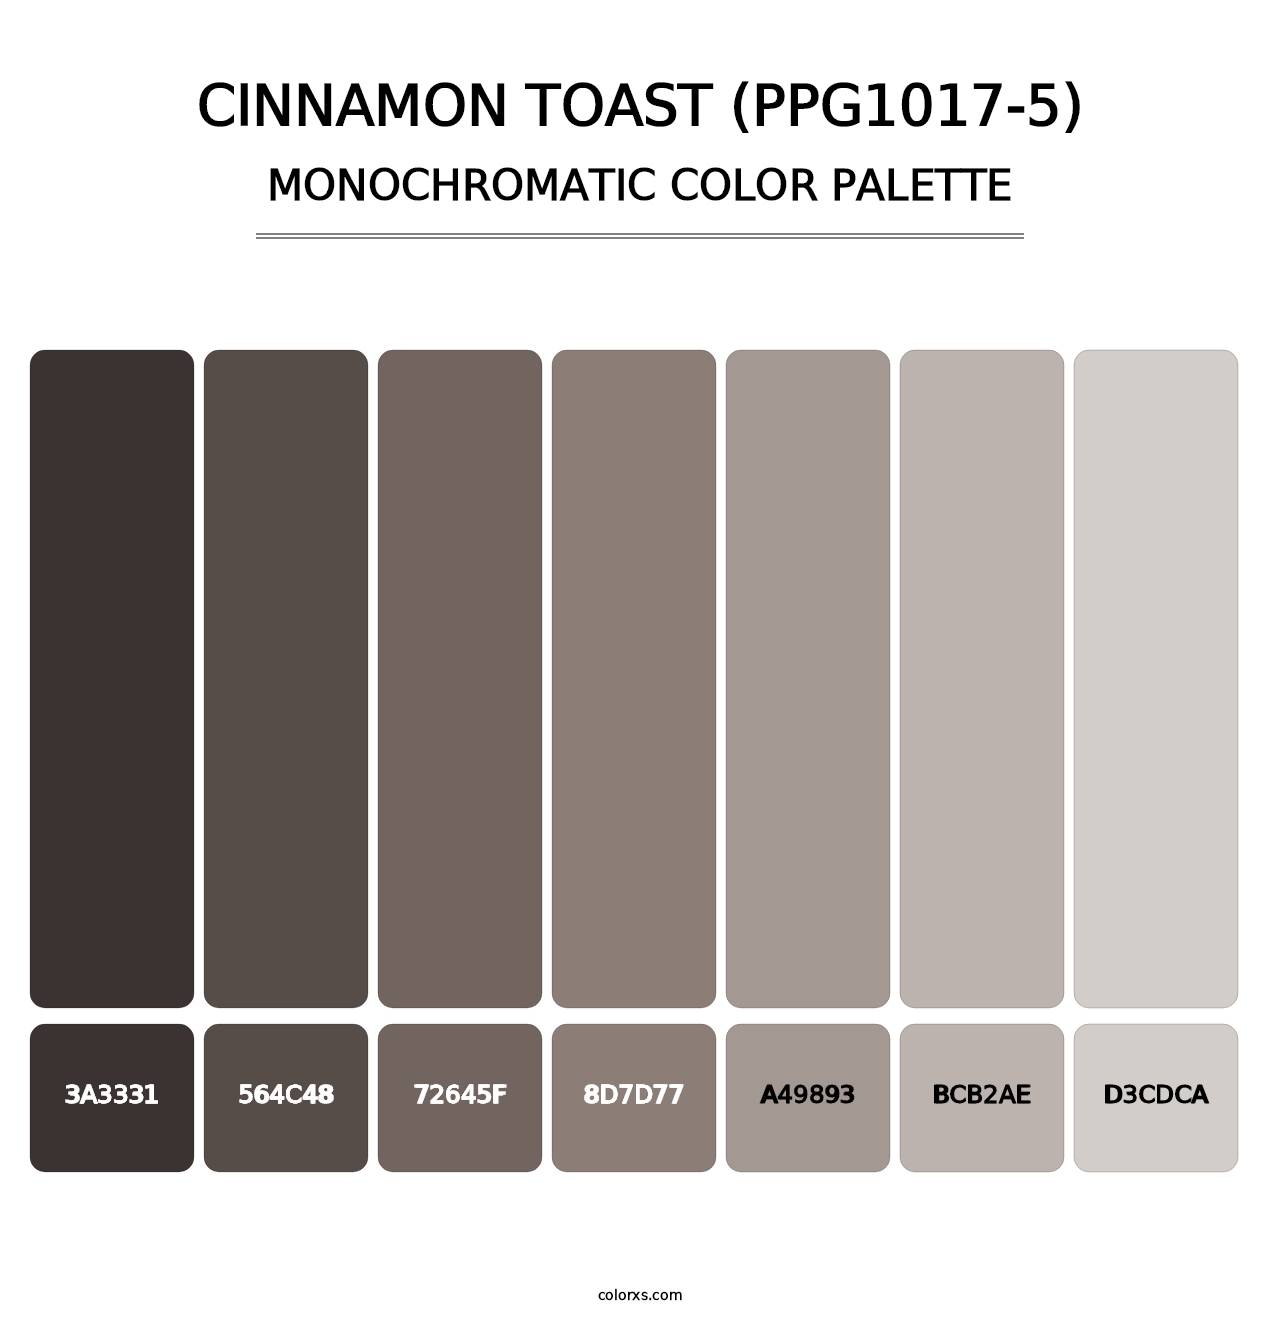 Cinnamon Toast (PPG1017-5) - Monochromatic Color Palette